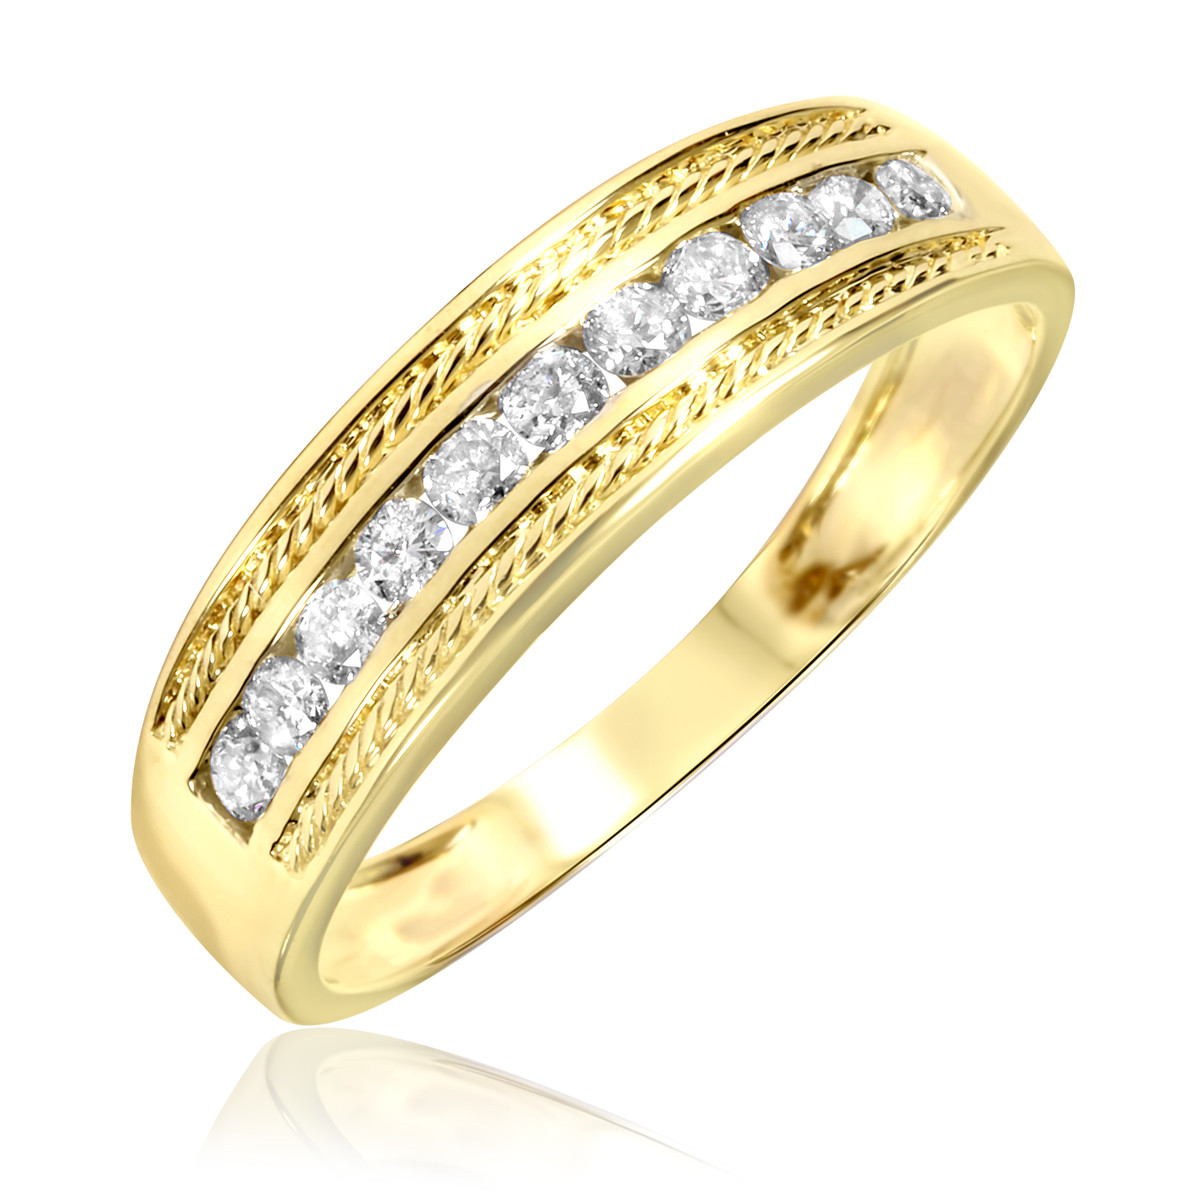 Mens Yellow Gold Diamond Rings
 3 4 Carat T W Diamond La s and Men s Wedding Rings 10K